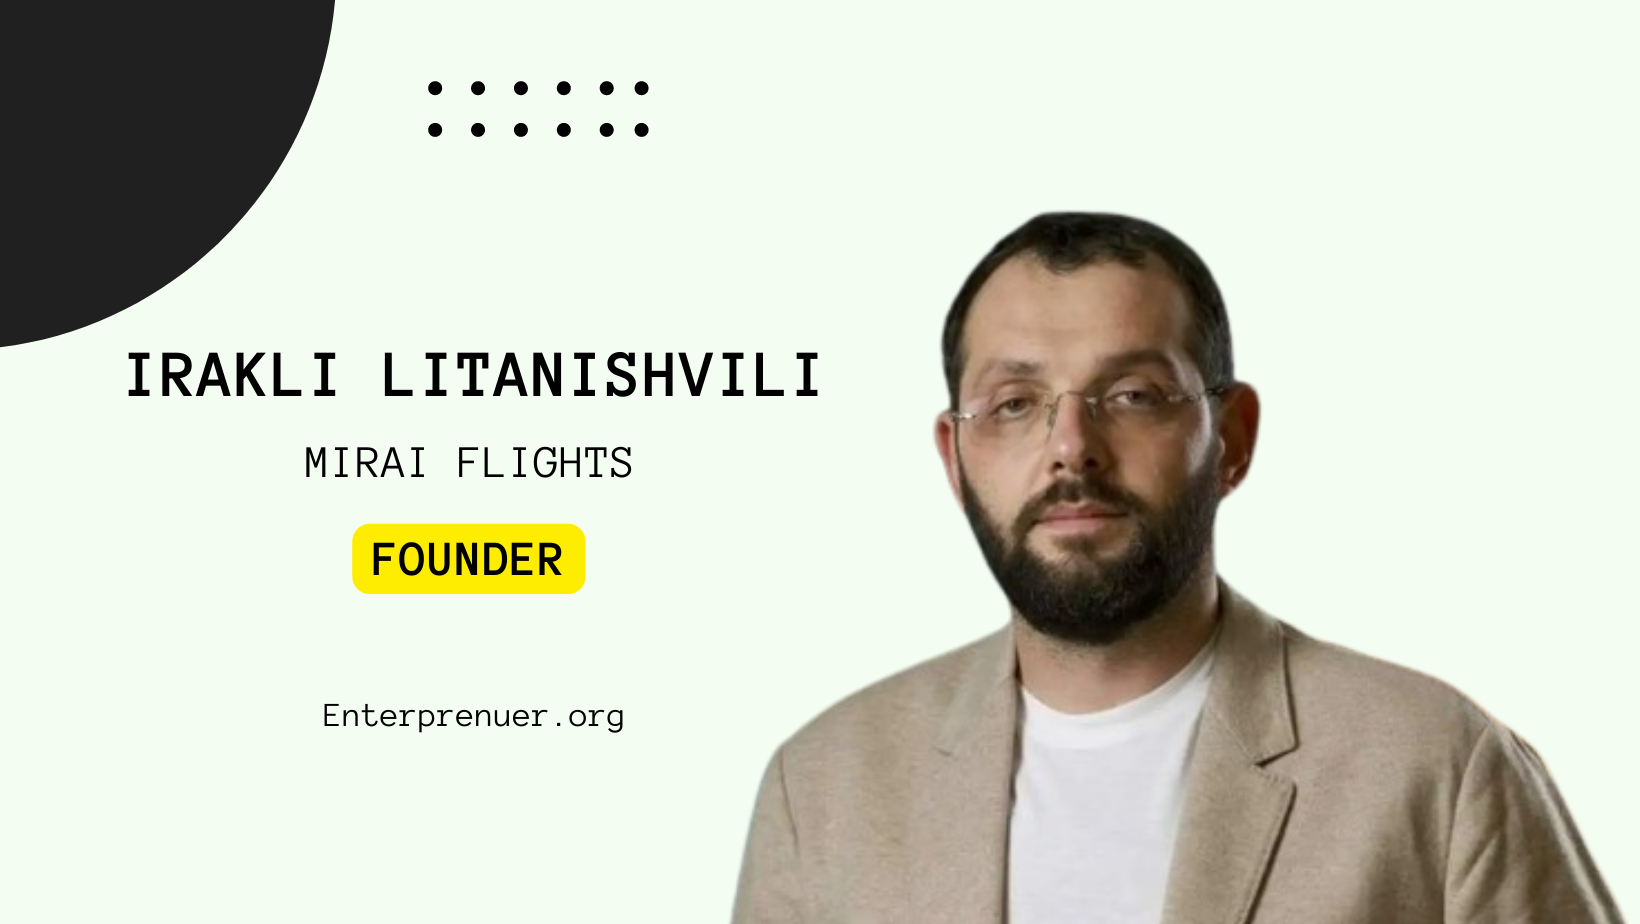 Meet Irakli Litanishvili, Founder of Mirai Flights